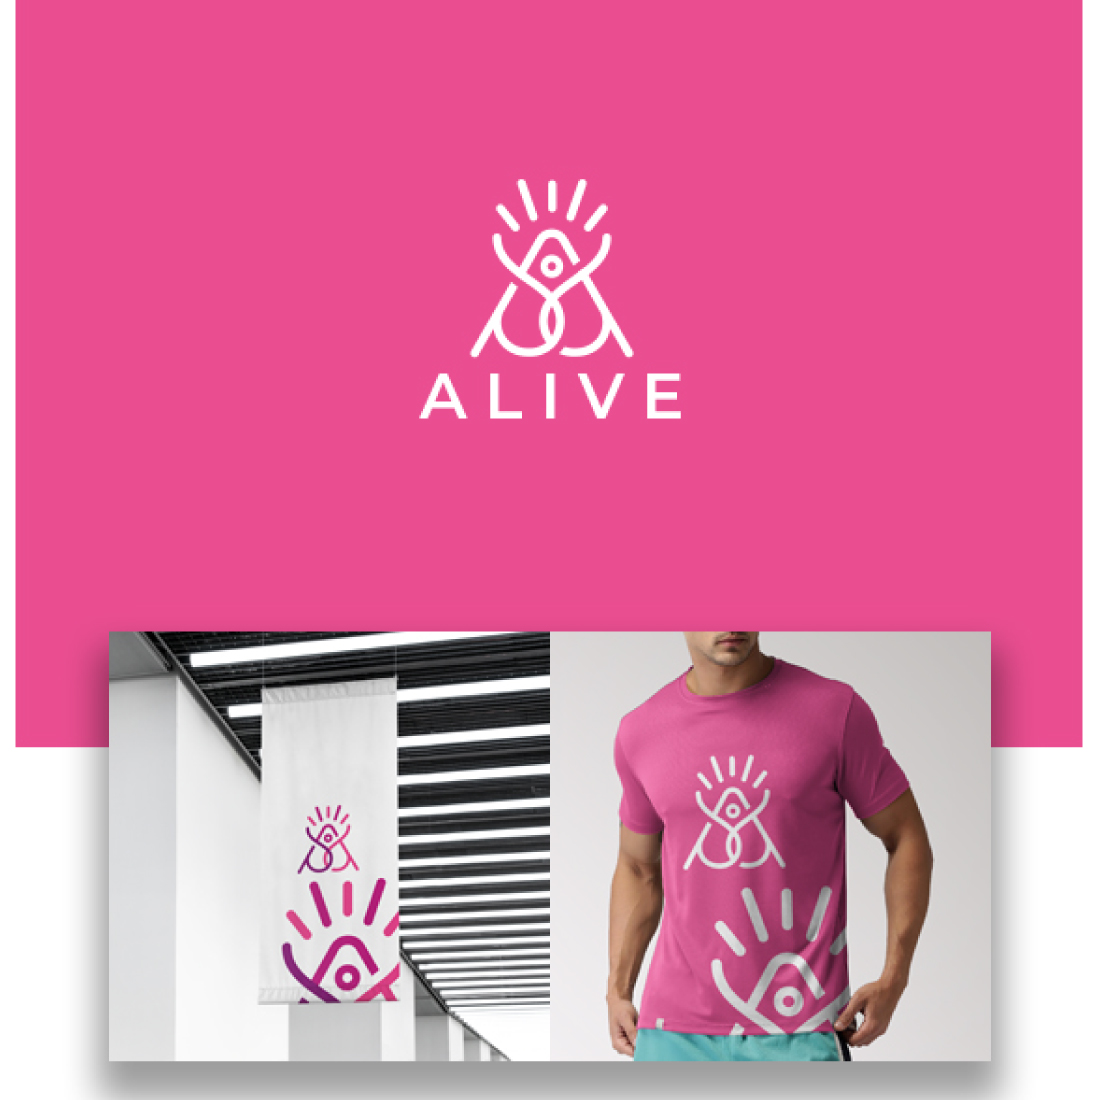 Alive yoga Logo preview image.